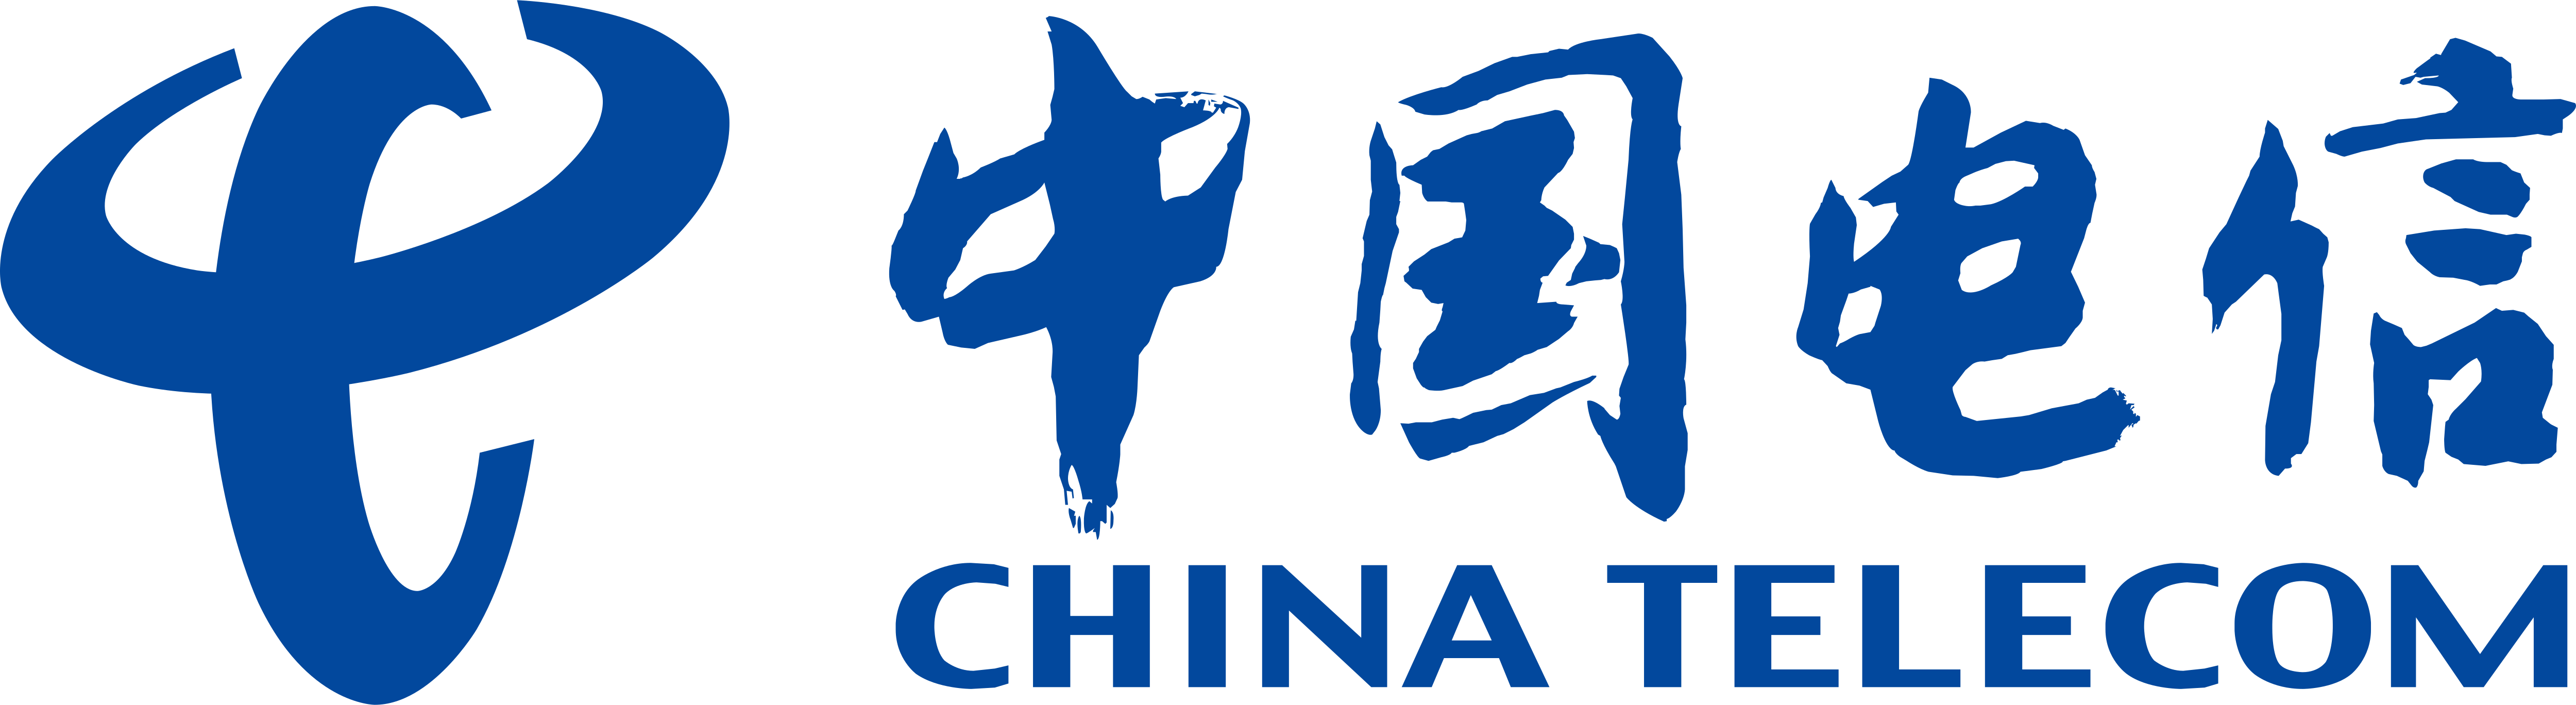 China Telecom Logos Download